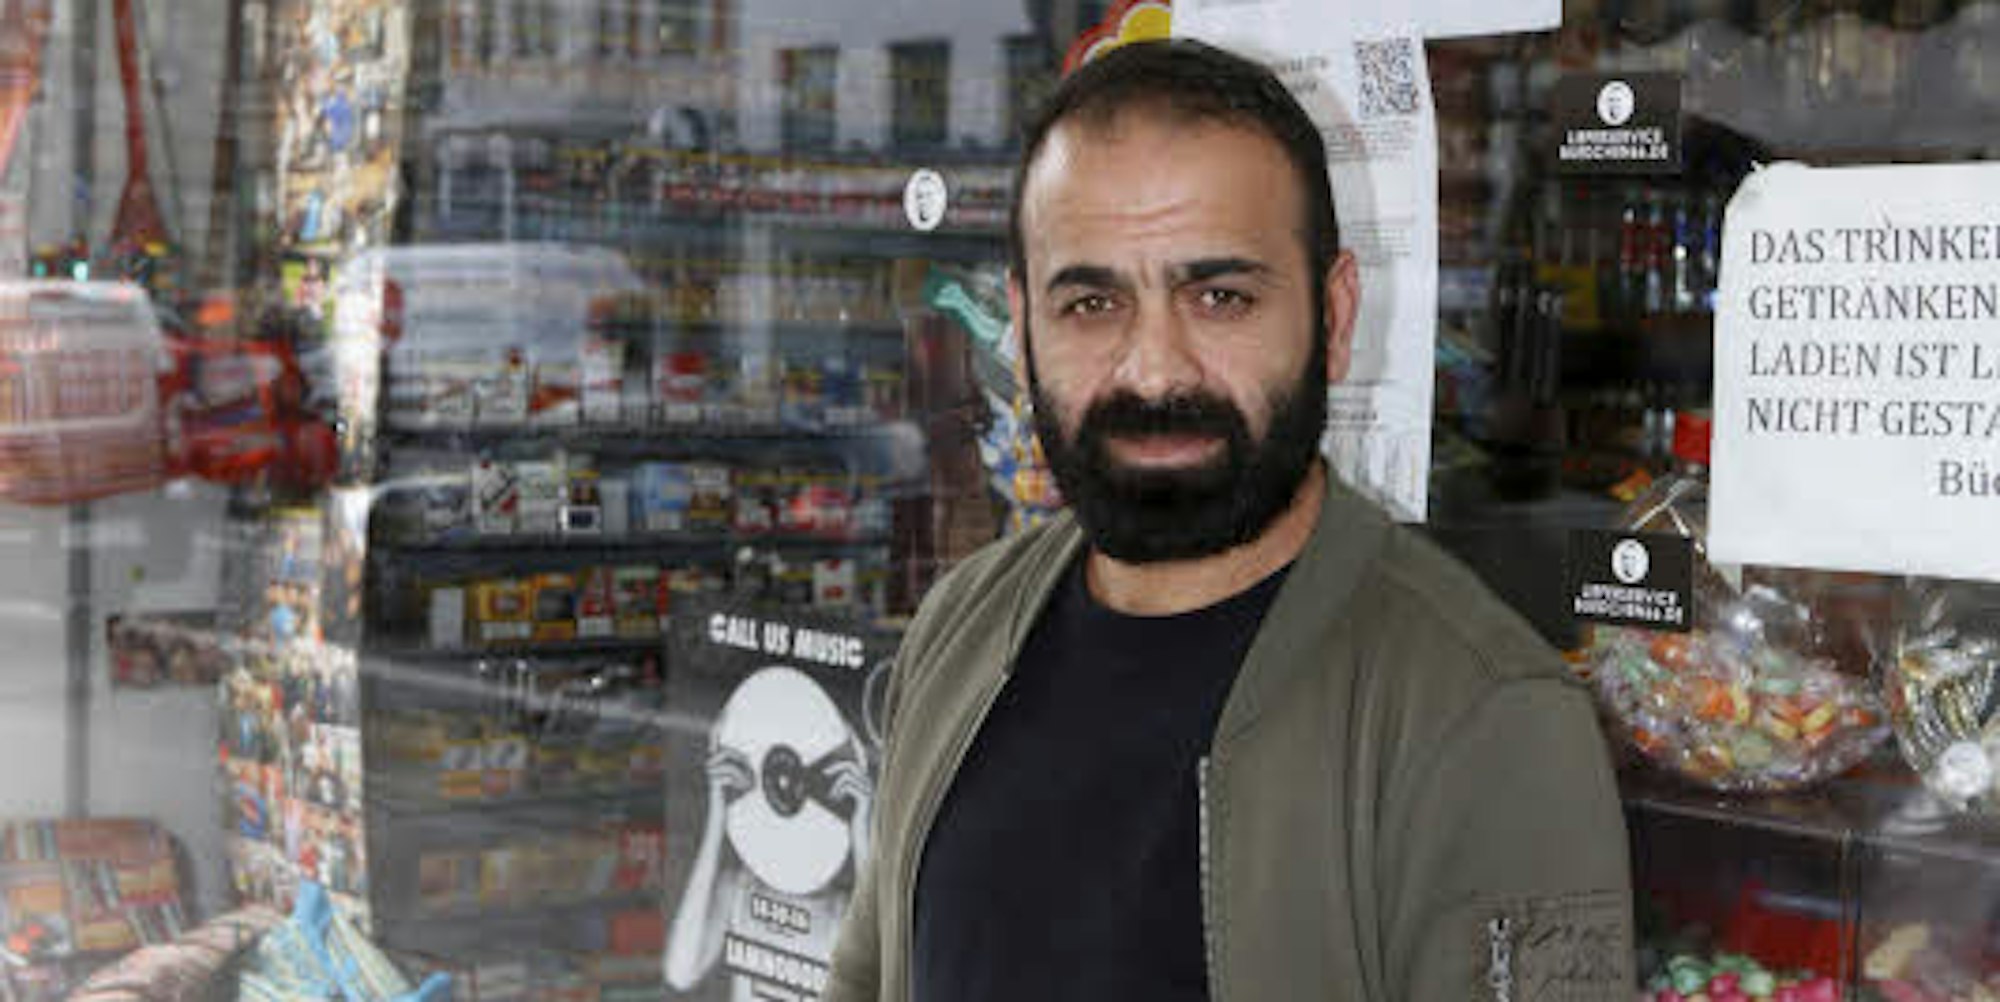 Kioskbesitzer Erkan Bukan hat Ärger mit der Stadt.